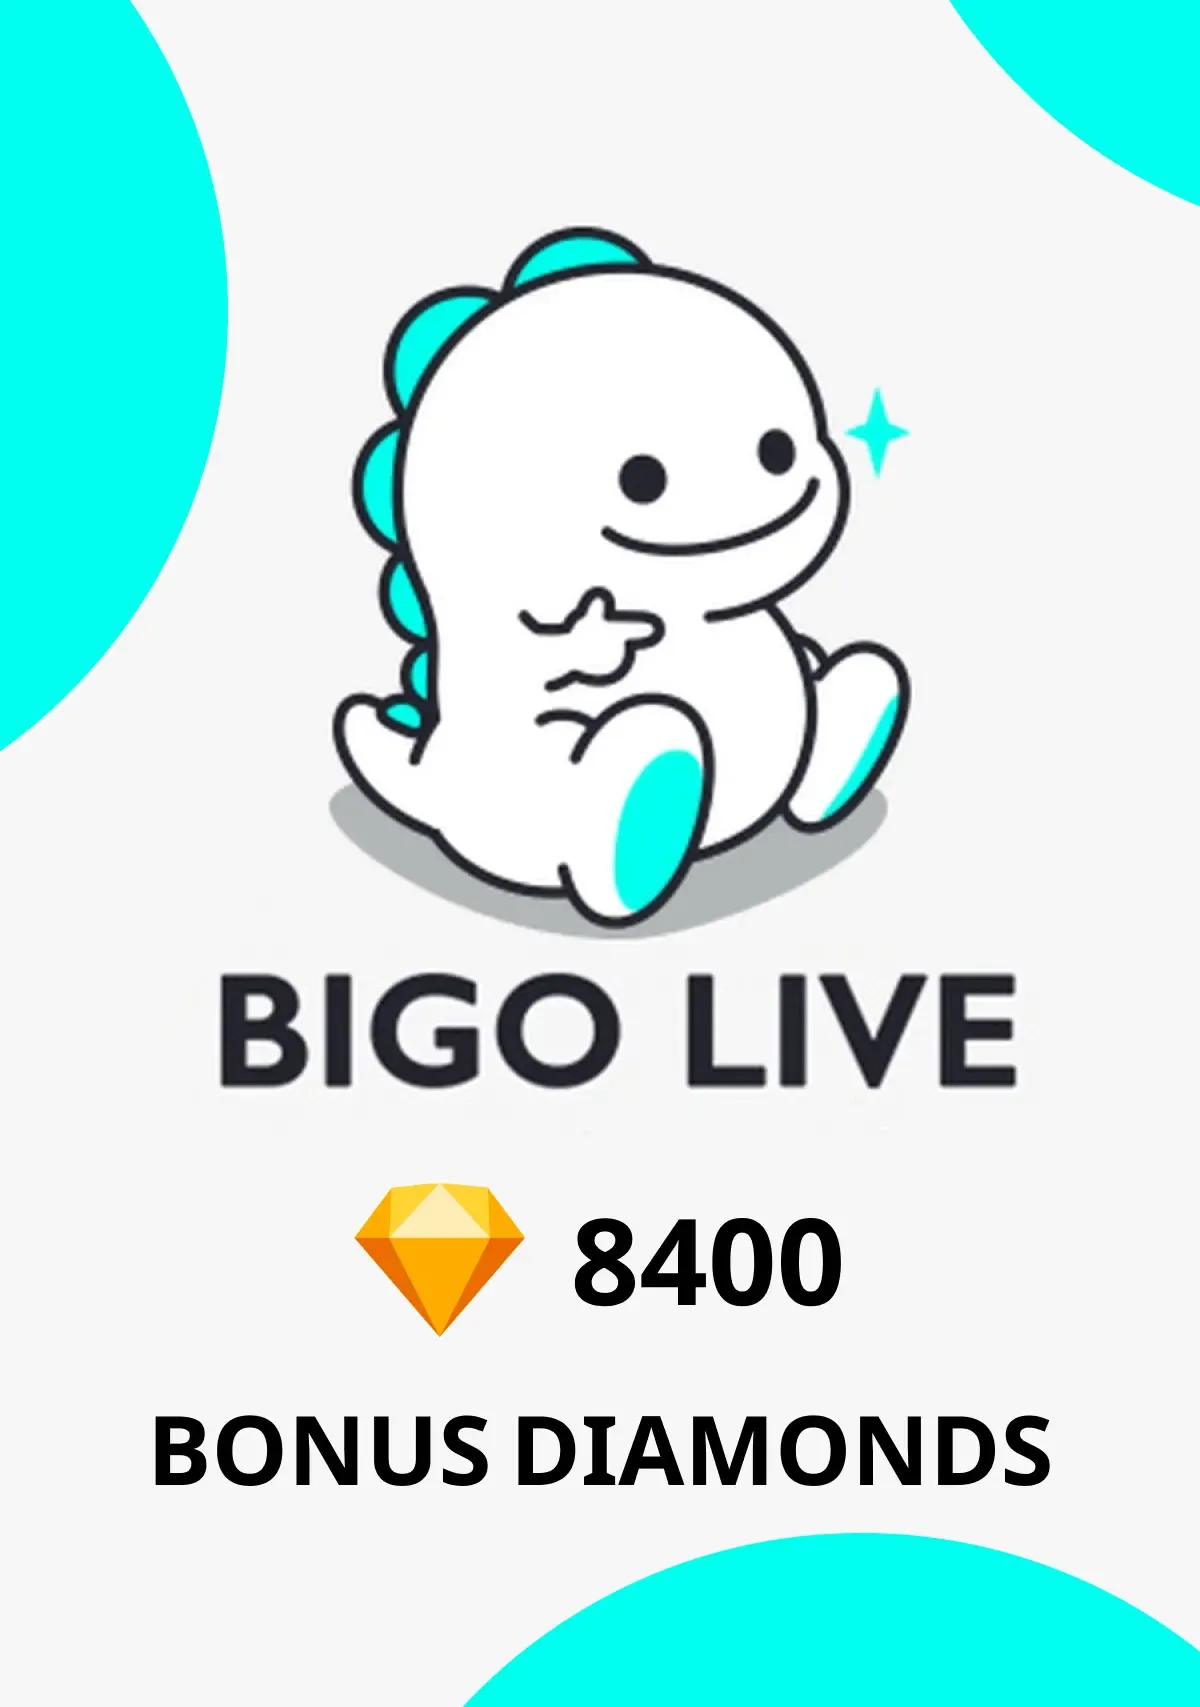 Comprar tarjeta regalo: Bigo Live Bonus Diamonds Digital Code